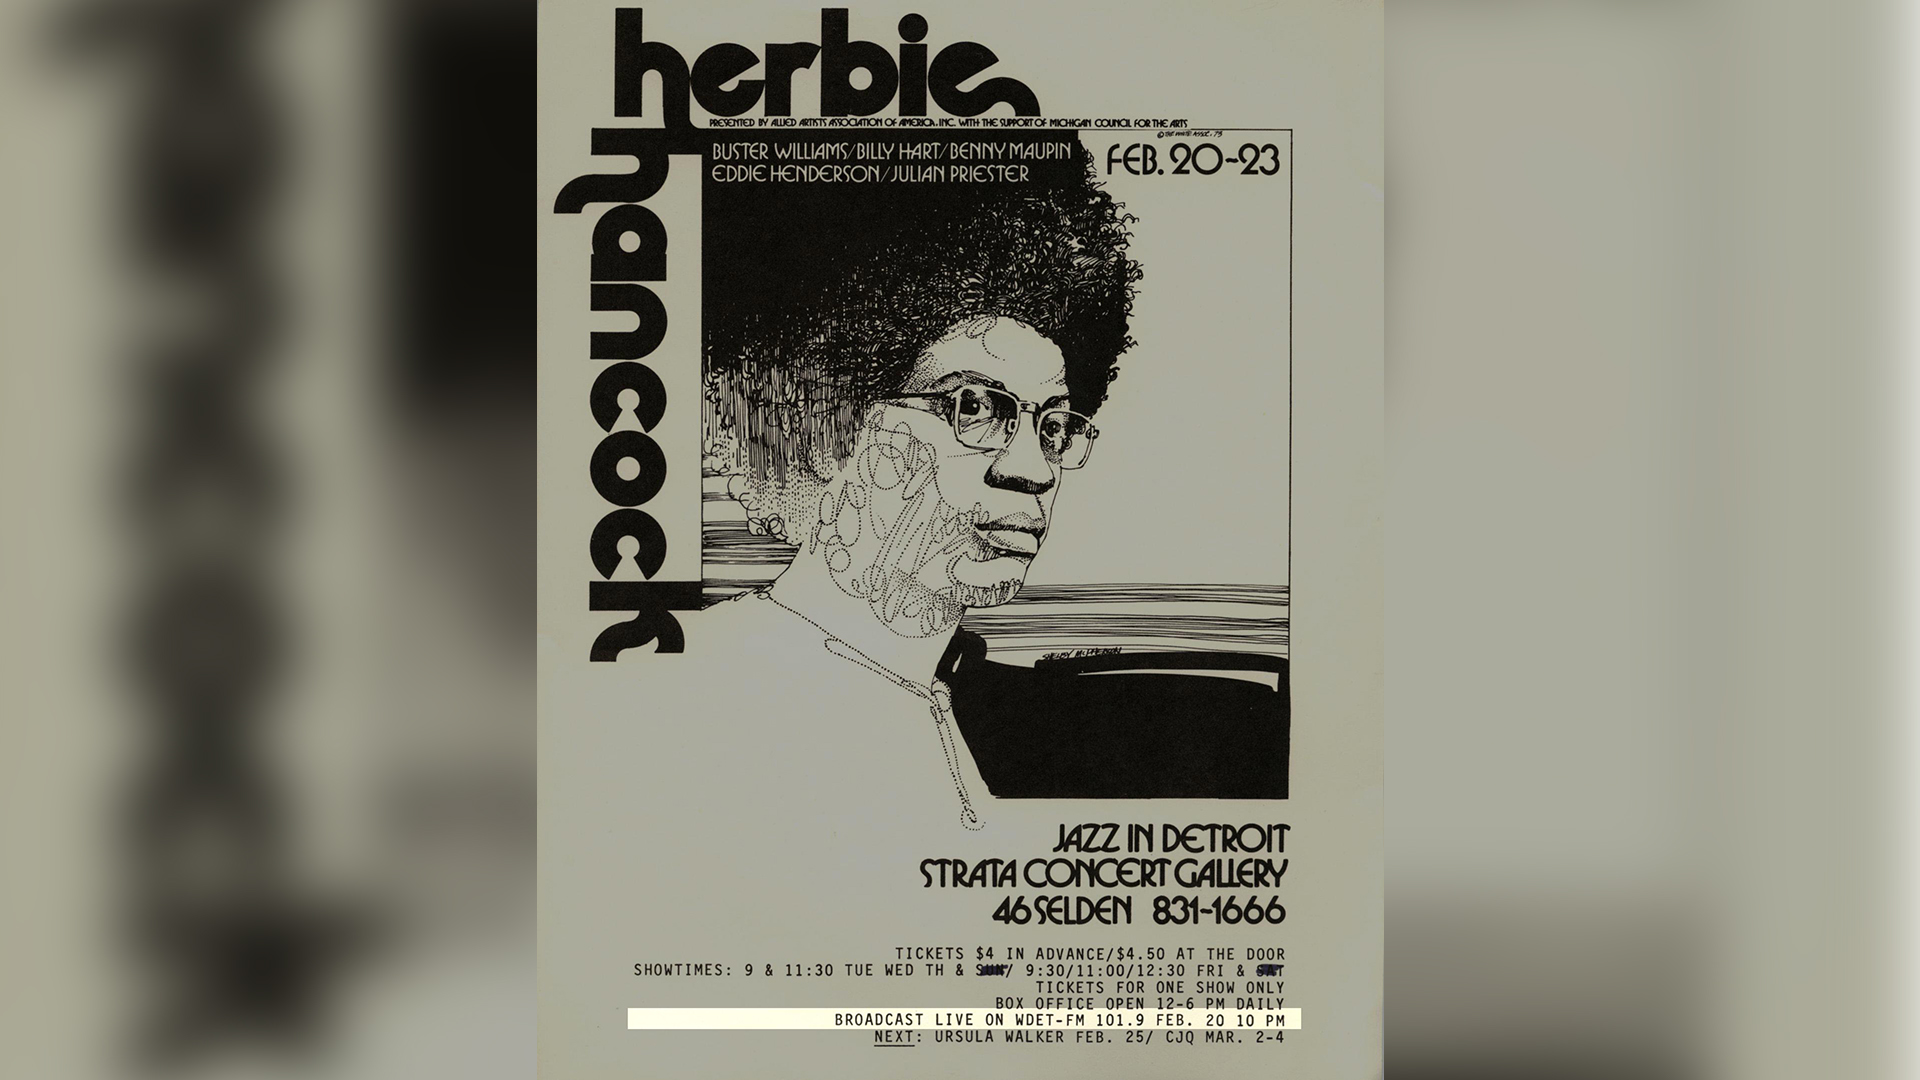 Concert poster promoting a Herbie Hancock concert at Strata Concert Gallery in Detroit.